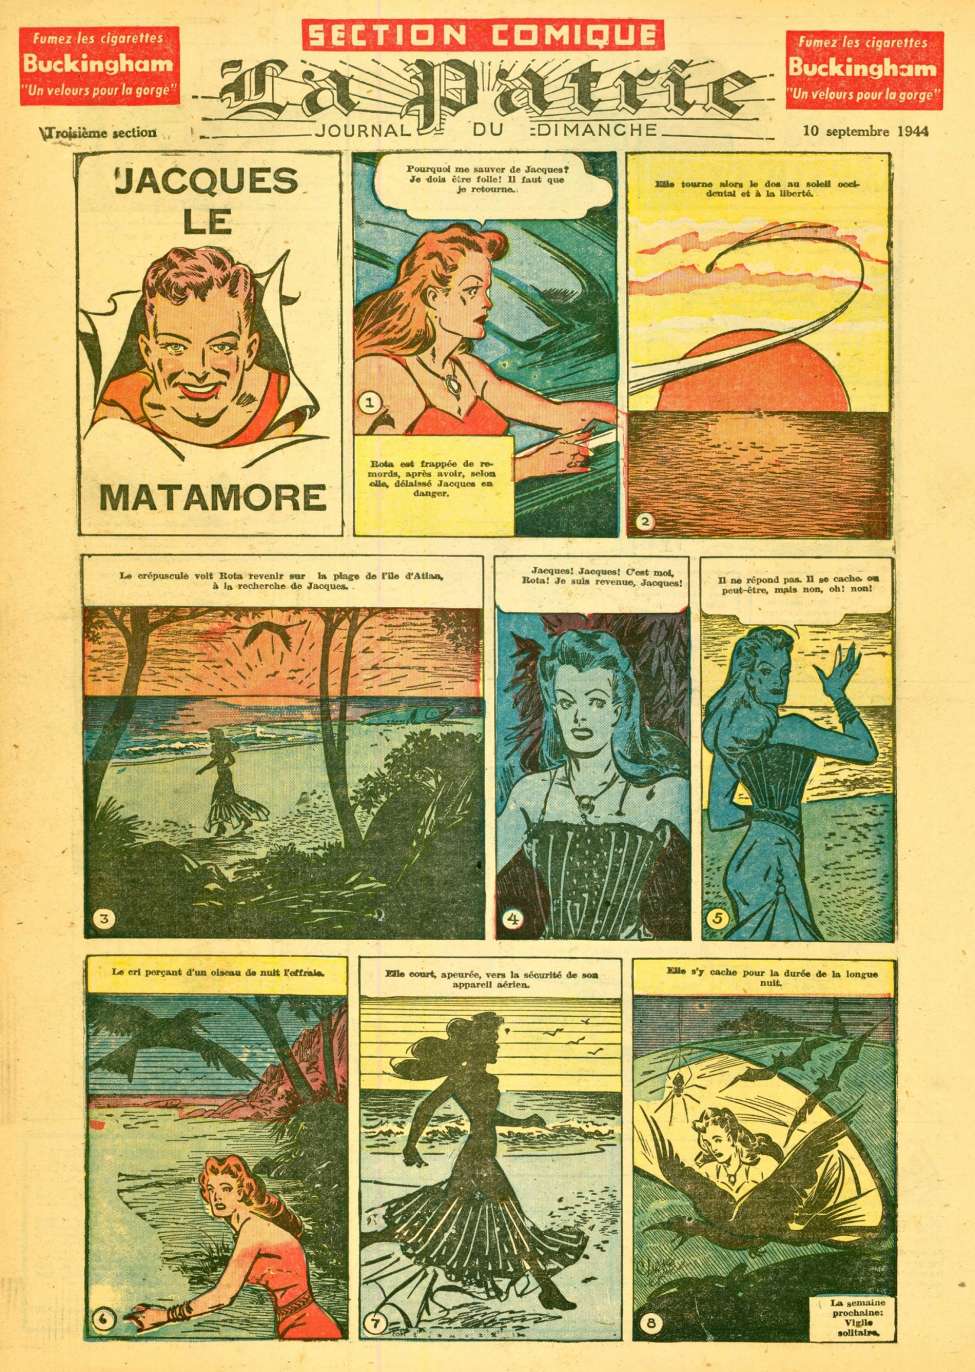 Book Cover For La Patrie - Section Comique (1944-09-10)